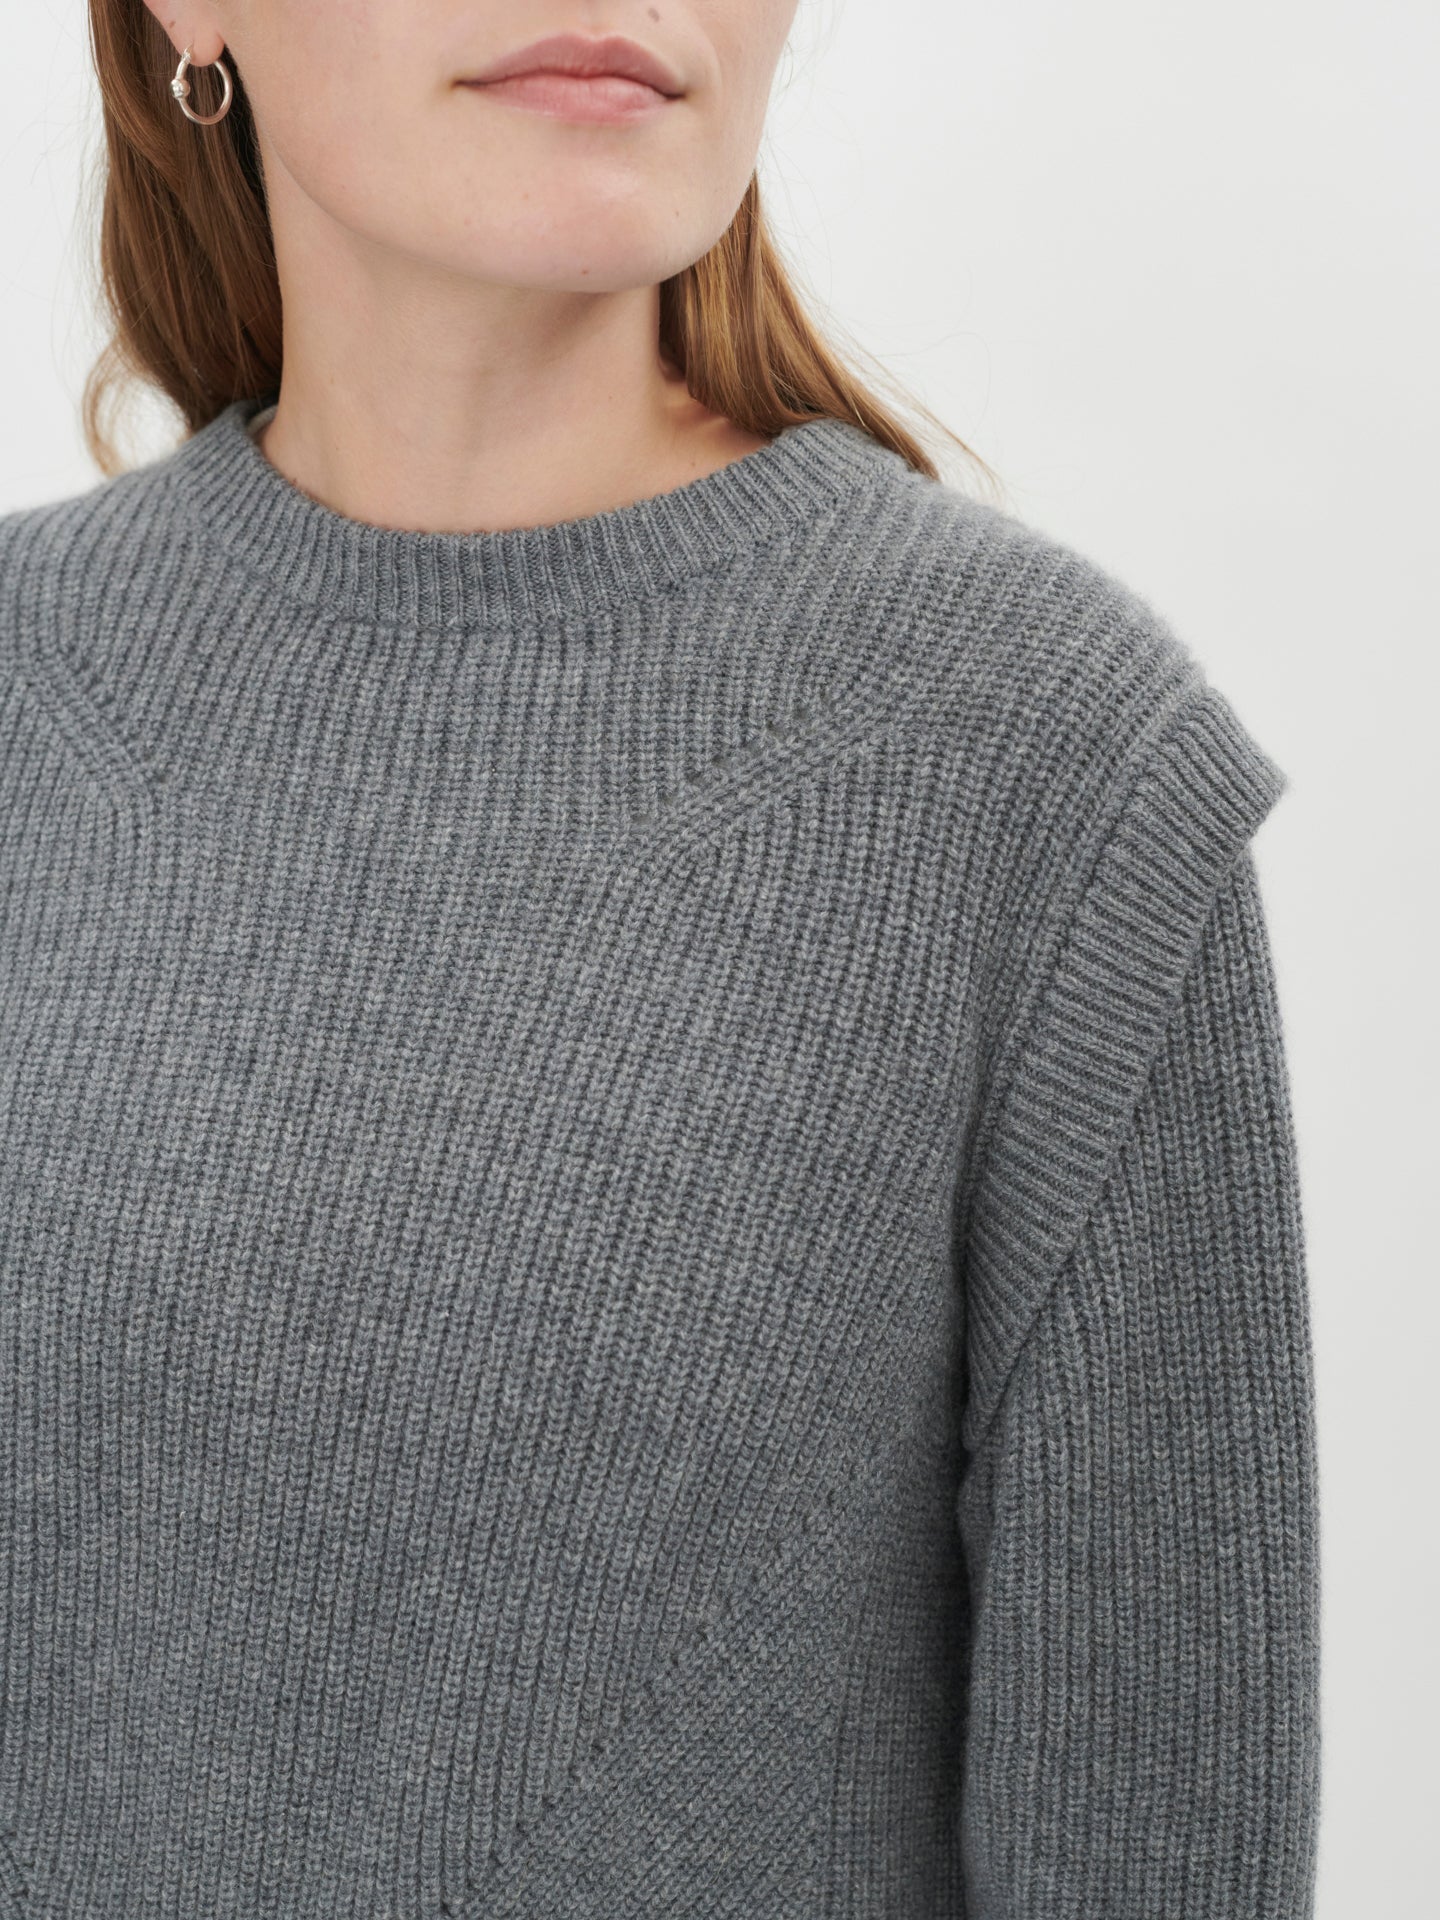 Women's Cashmere Layered Effect Sweater Dim Gray - Gobi Cashmere